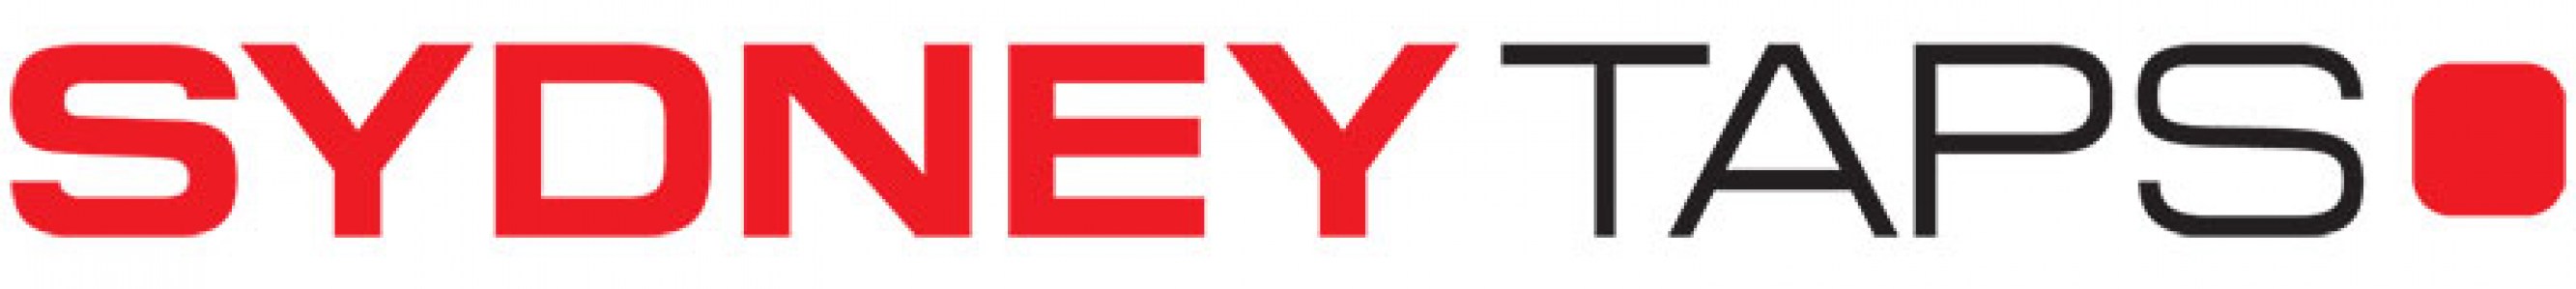 sydney-taps-logo